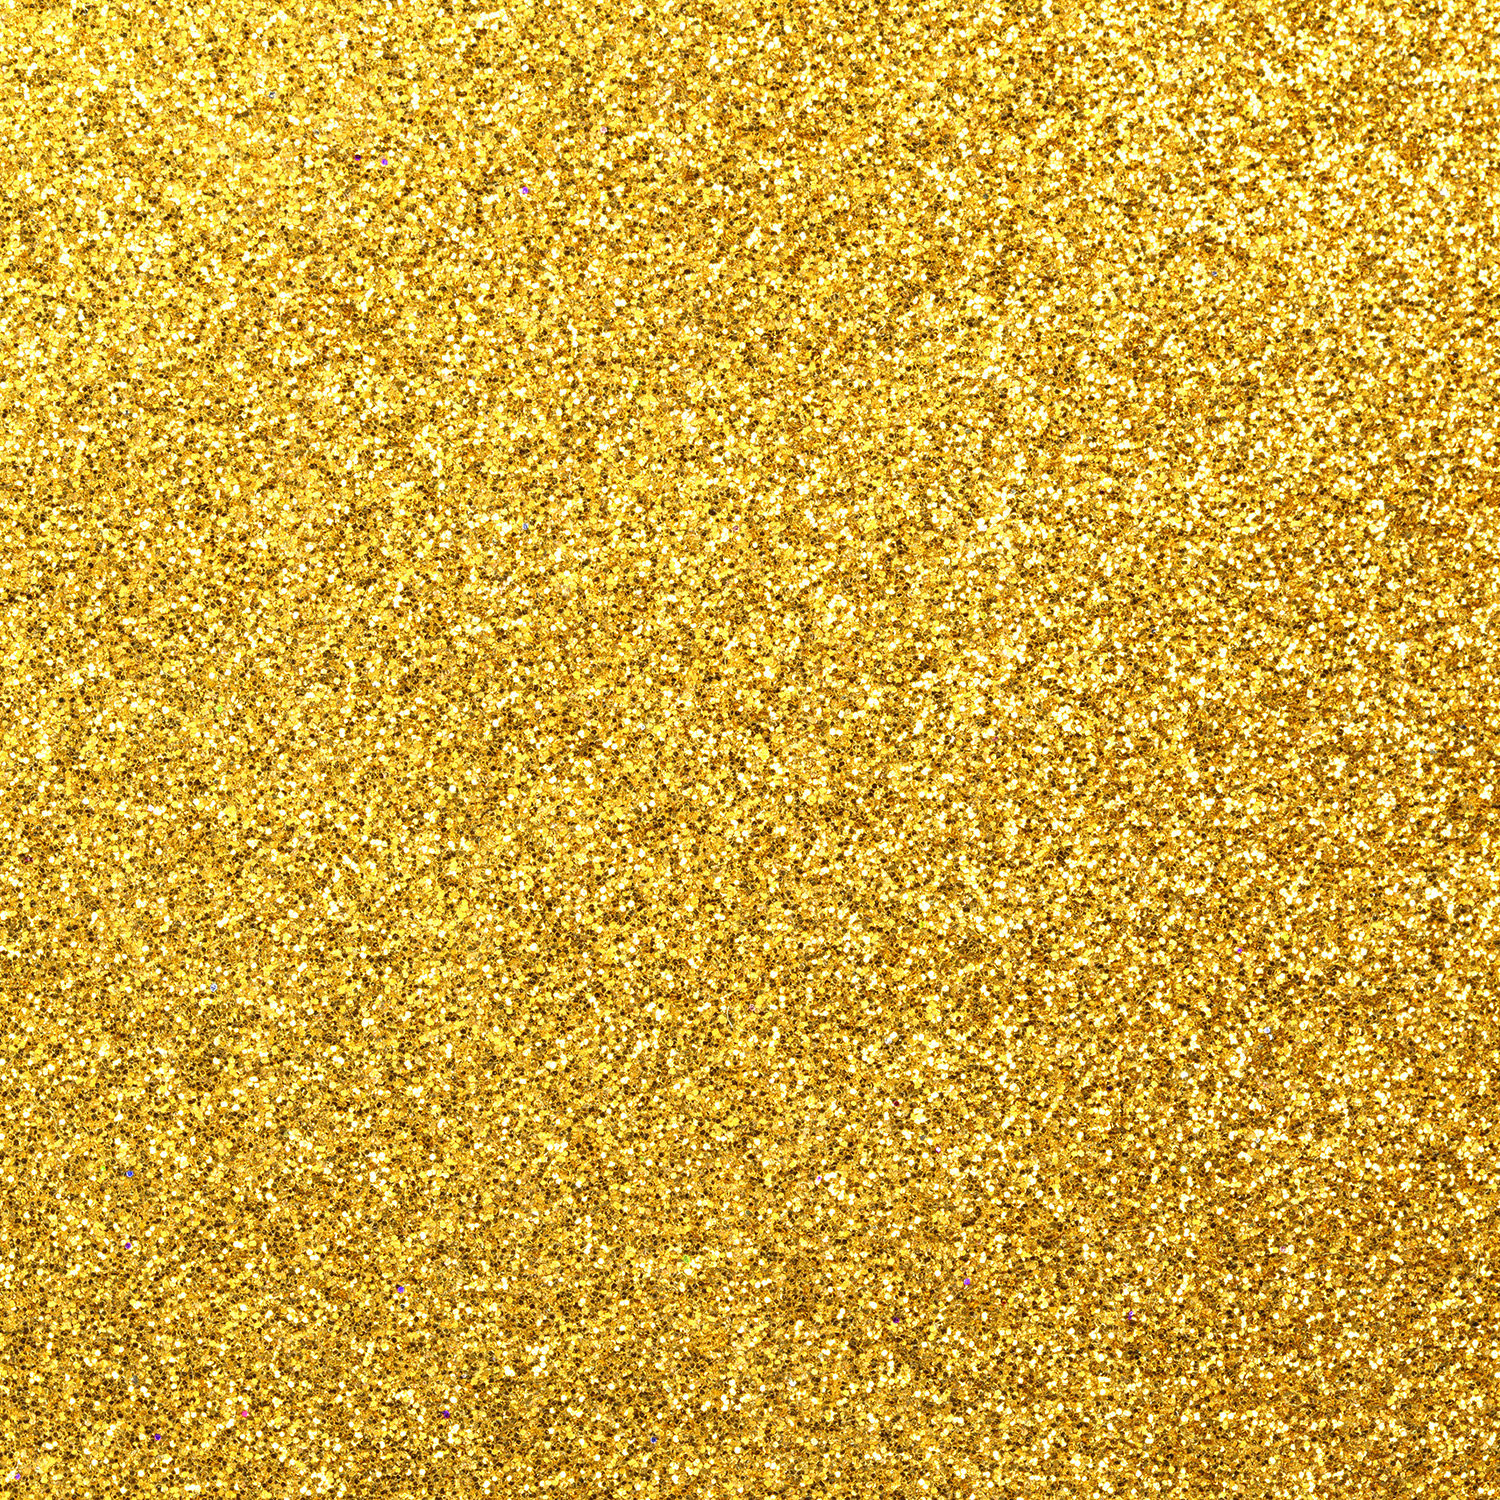 Gold glitter wallpaper